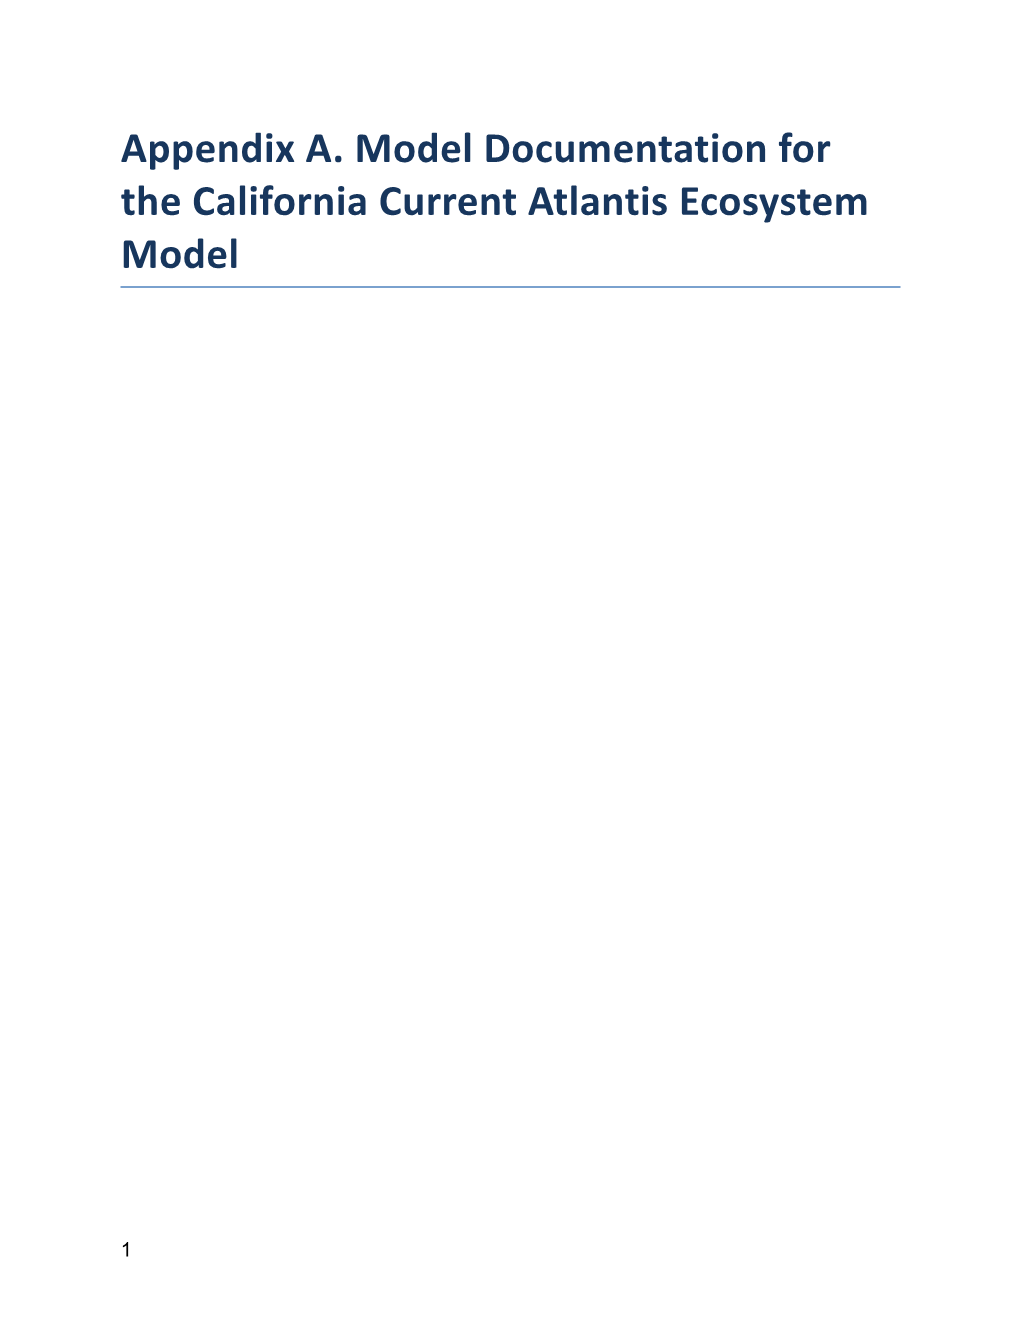 Appendix A. Model Documentation for the California Current Atlantis Ecosystem Model